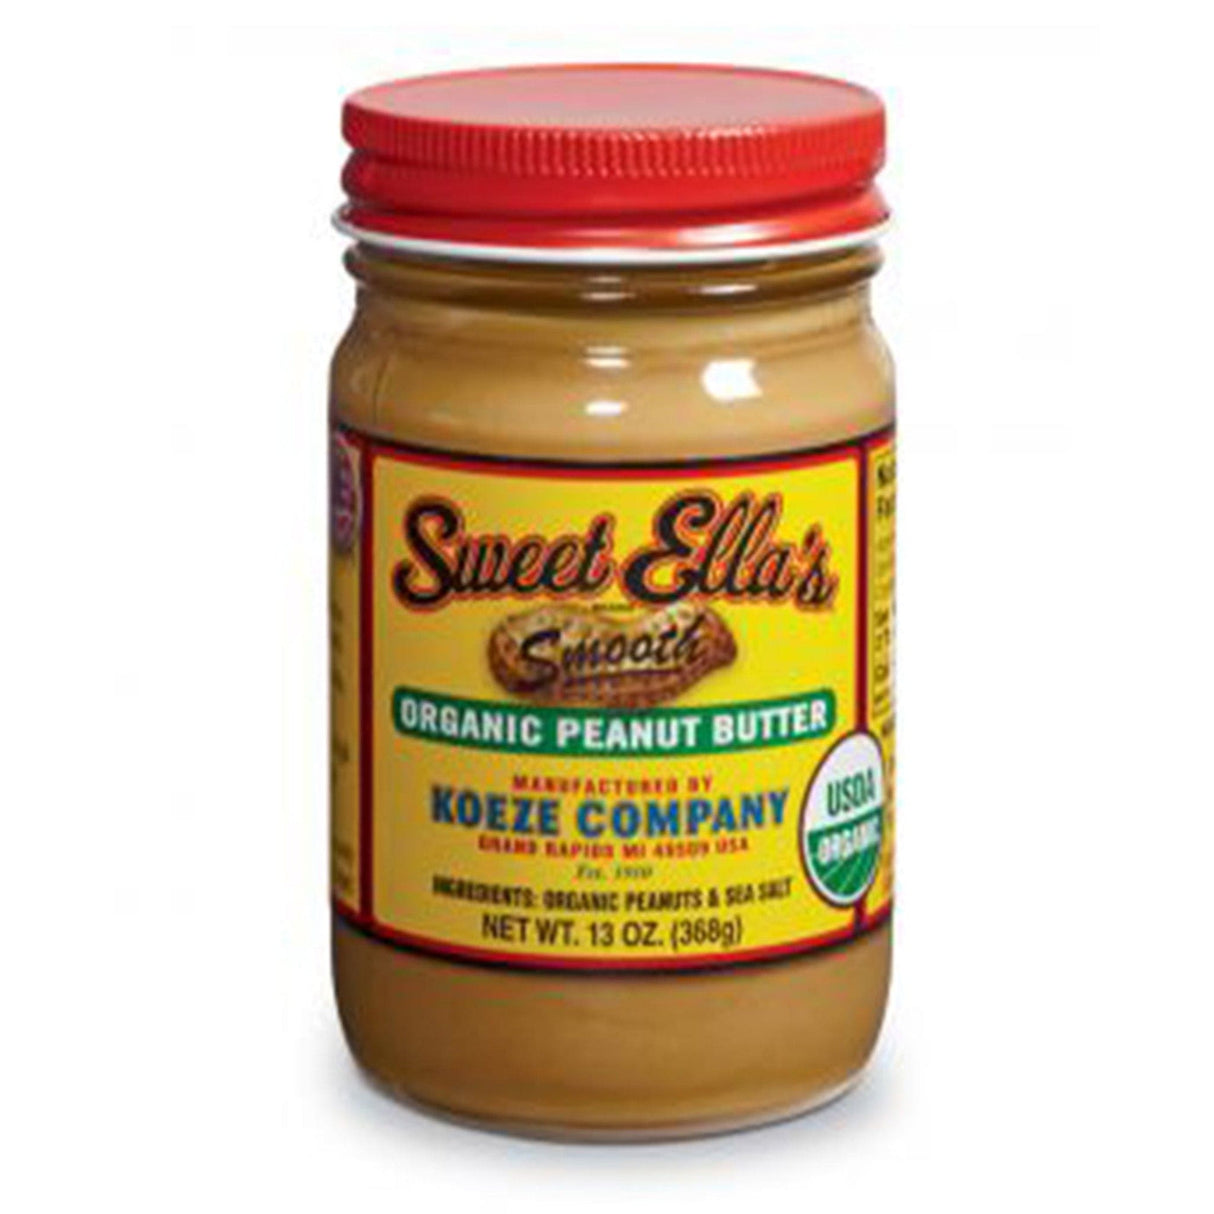 Sweet Ella's Smooth Organic Peanut Butter